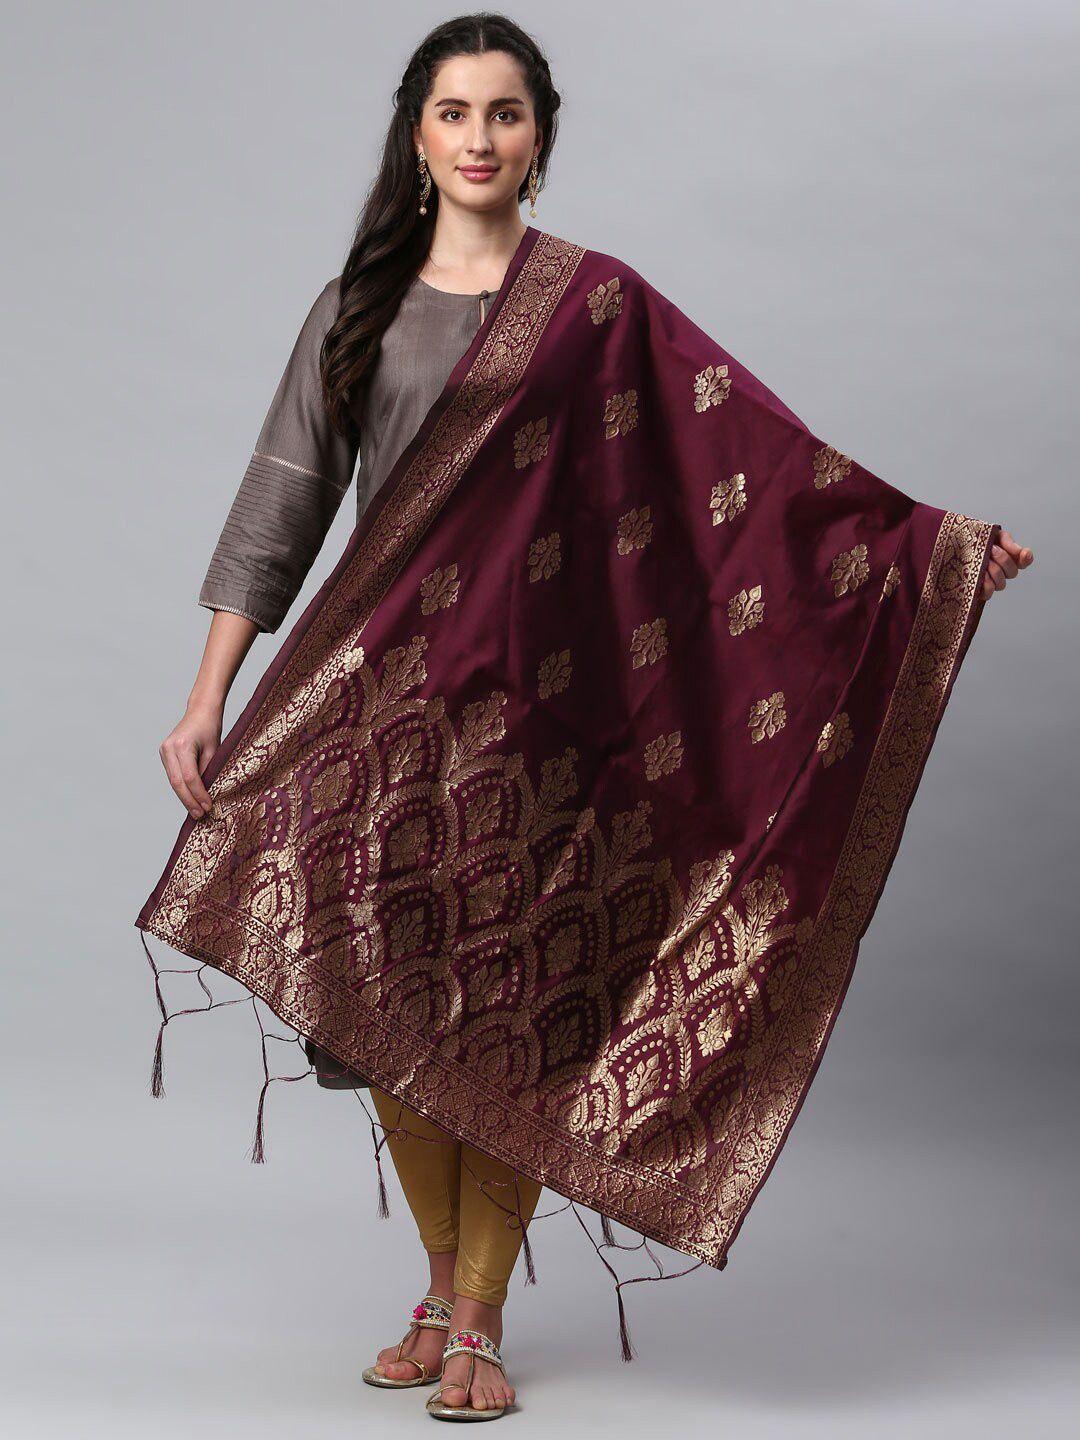 lilots violet & gold-toned ethnic motifs woven design dupatta with zari